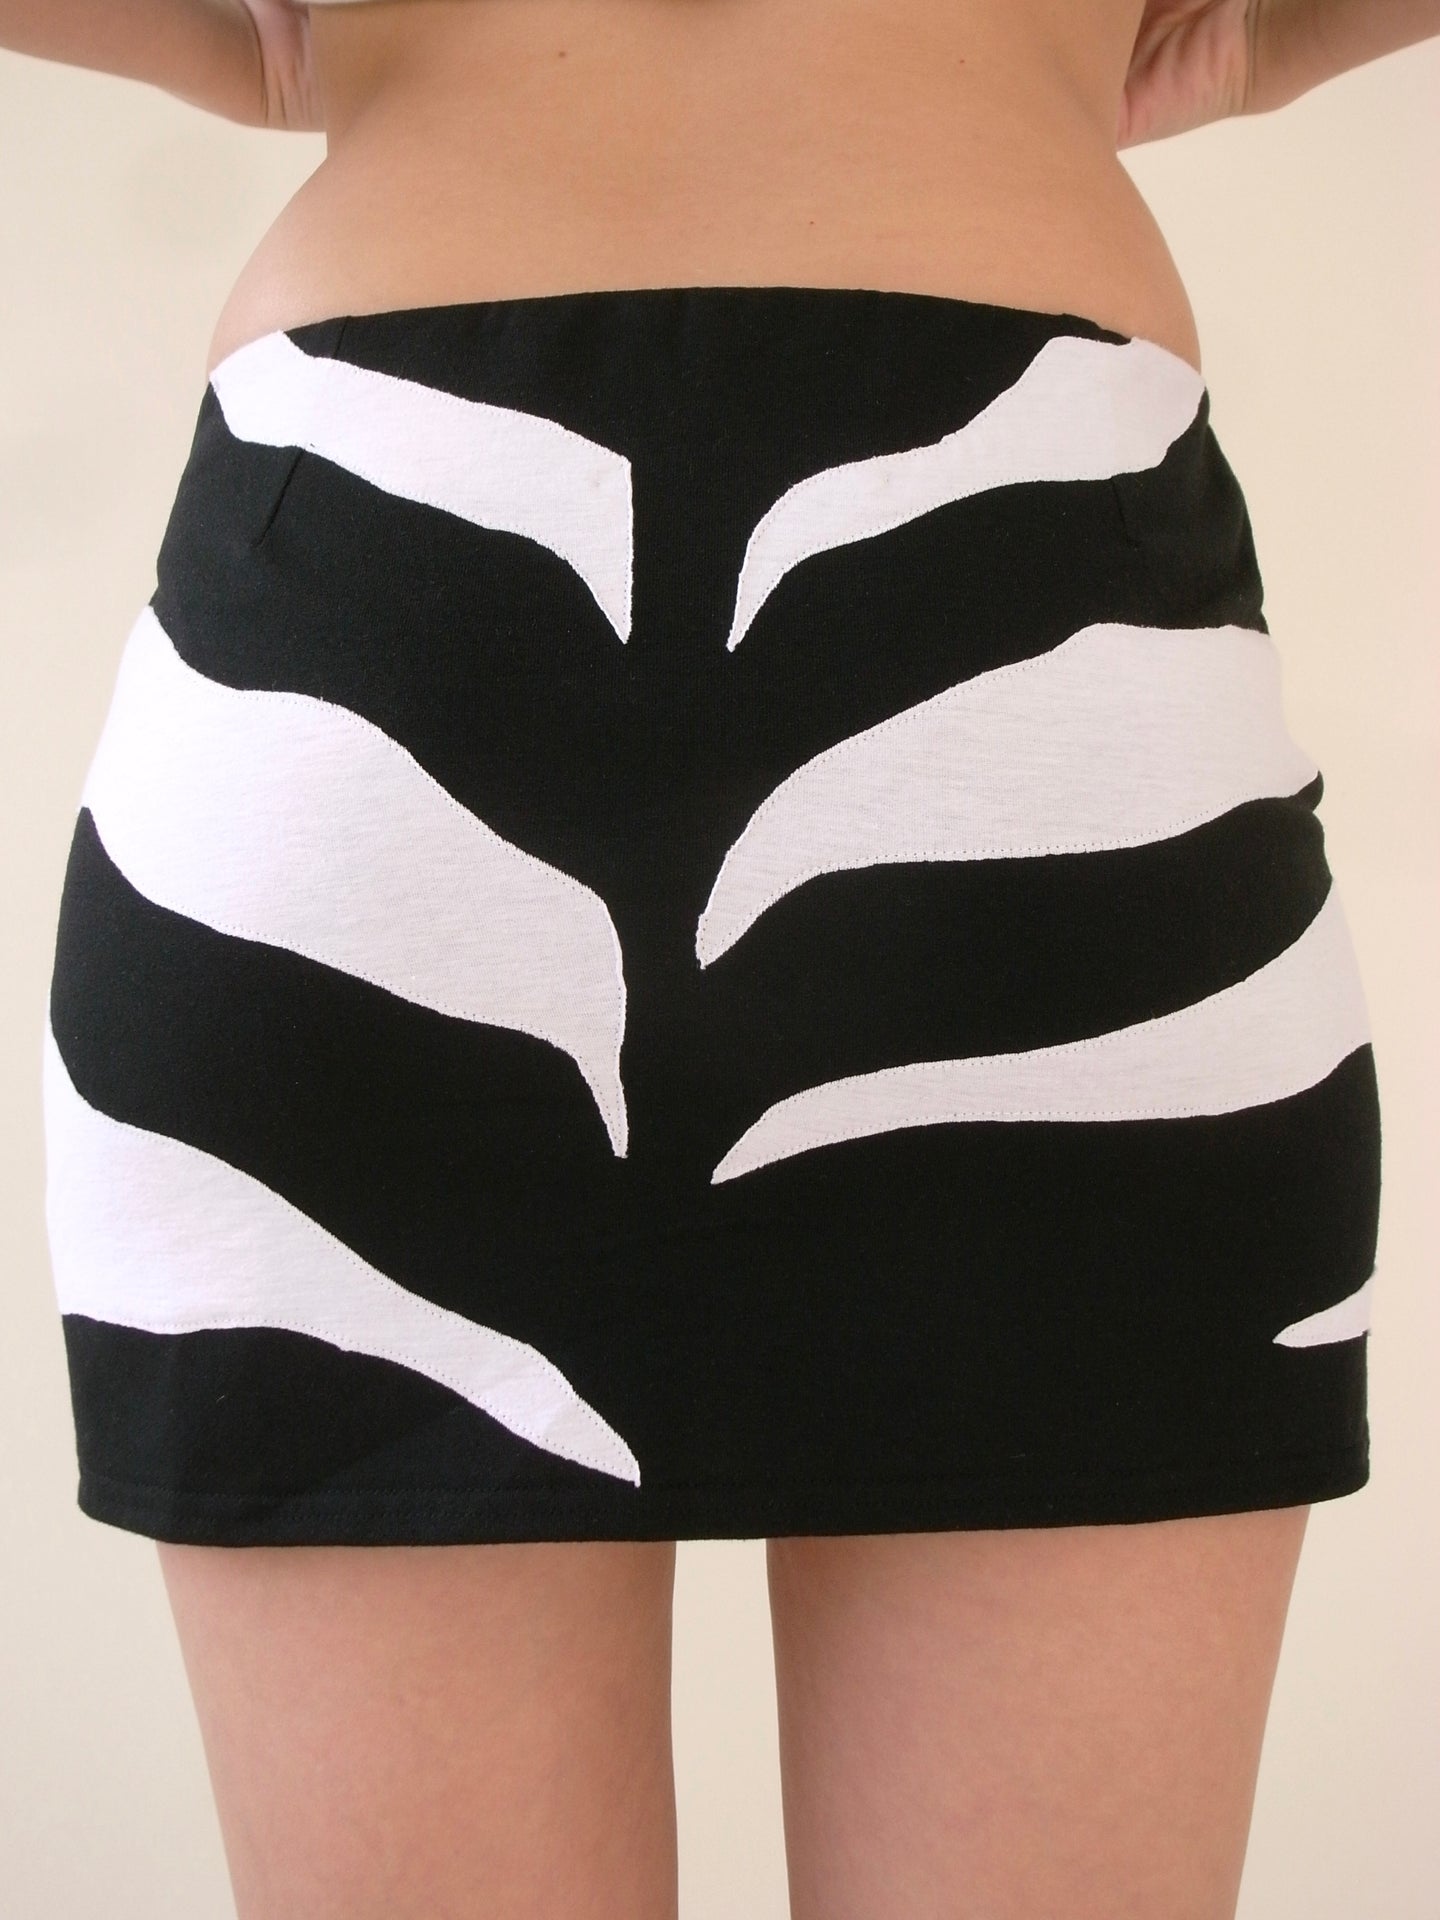 The Reconstituted Jersey Zebra Applique Mini-Skirt